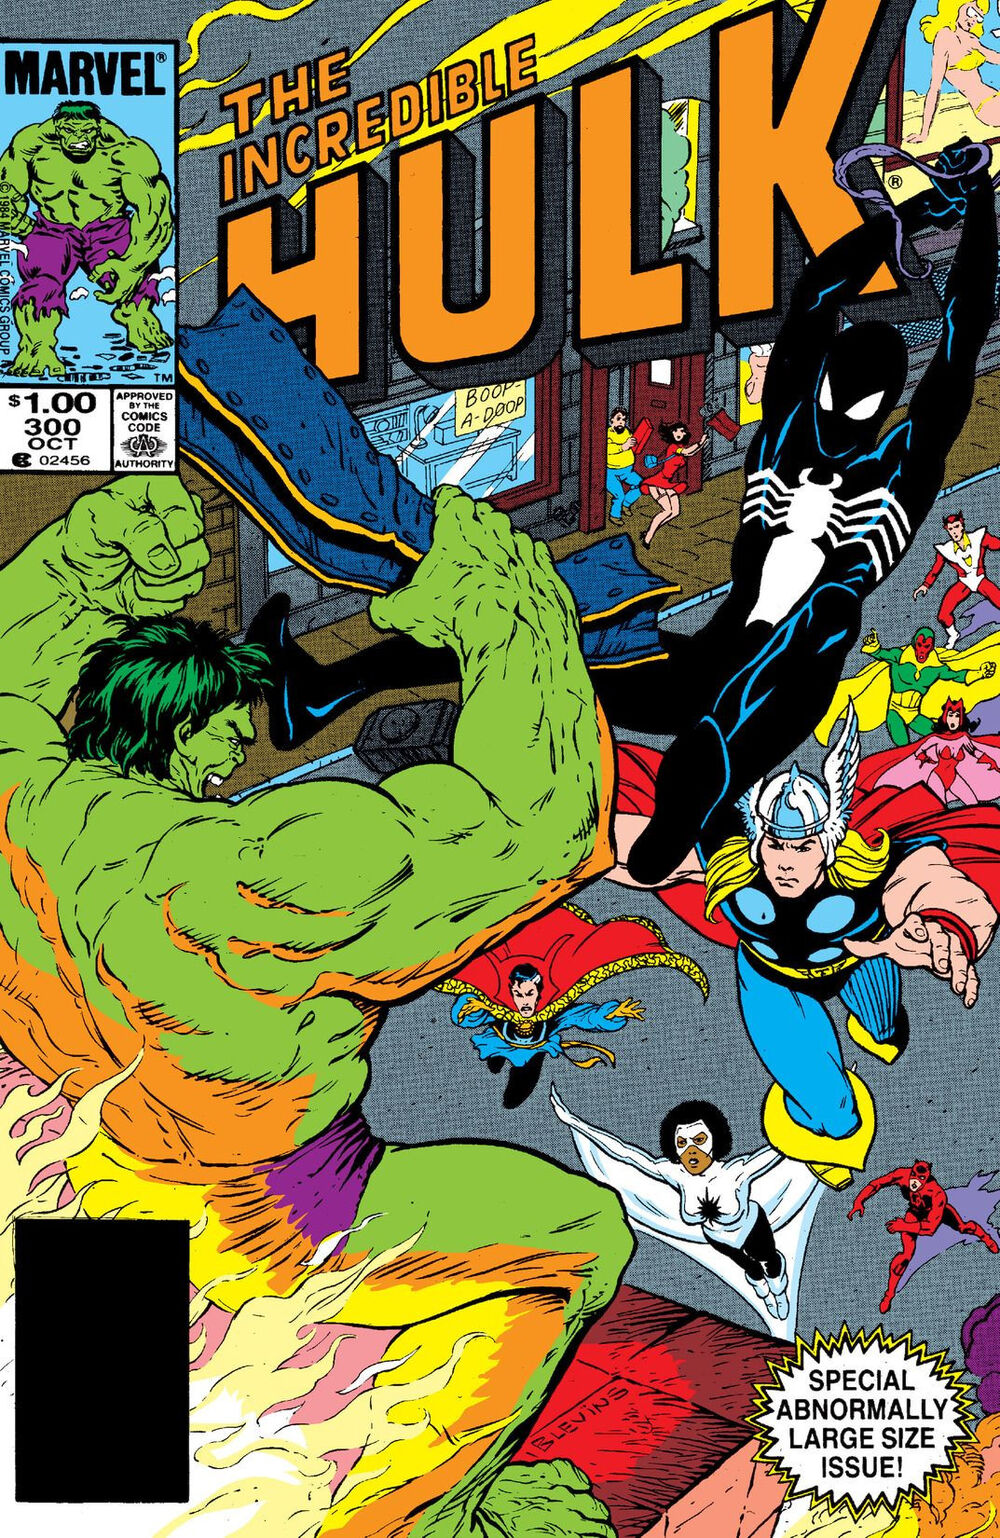 The Incredible Hulk Volume 1 #300